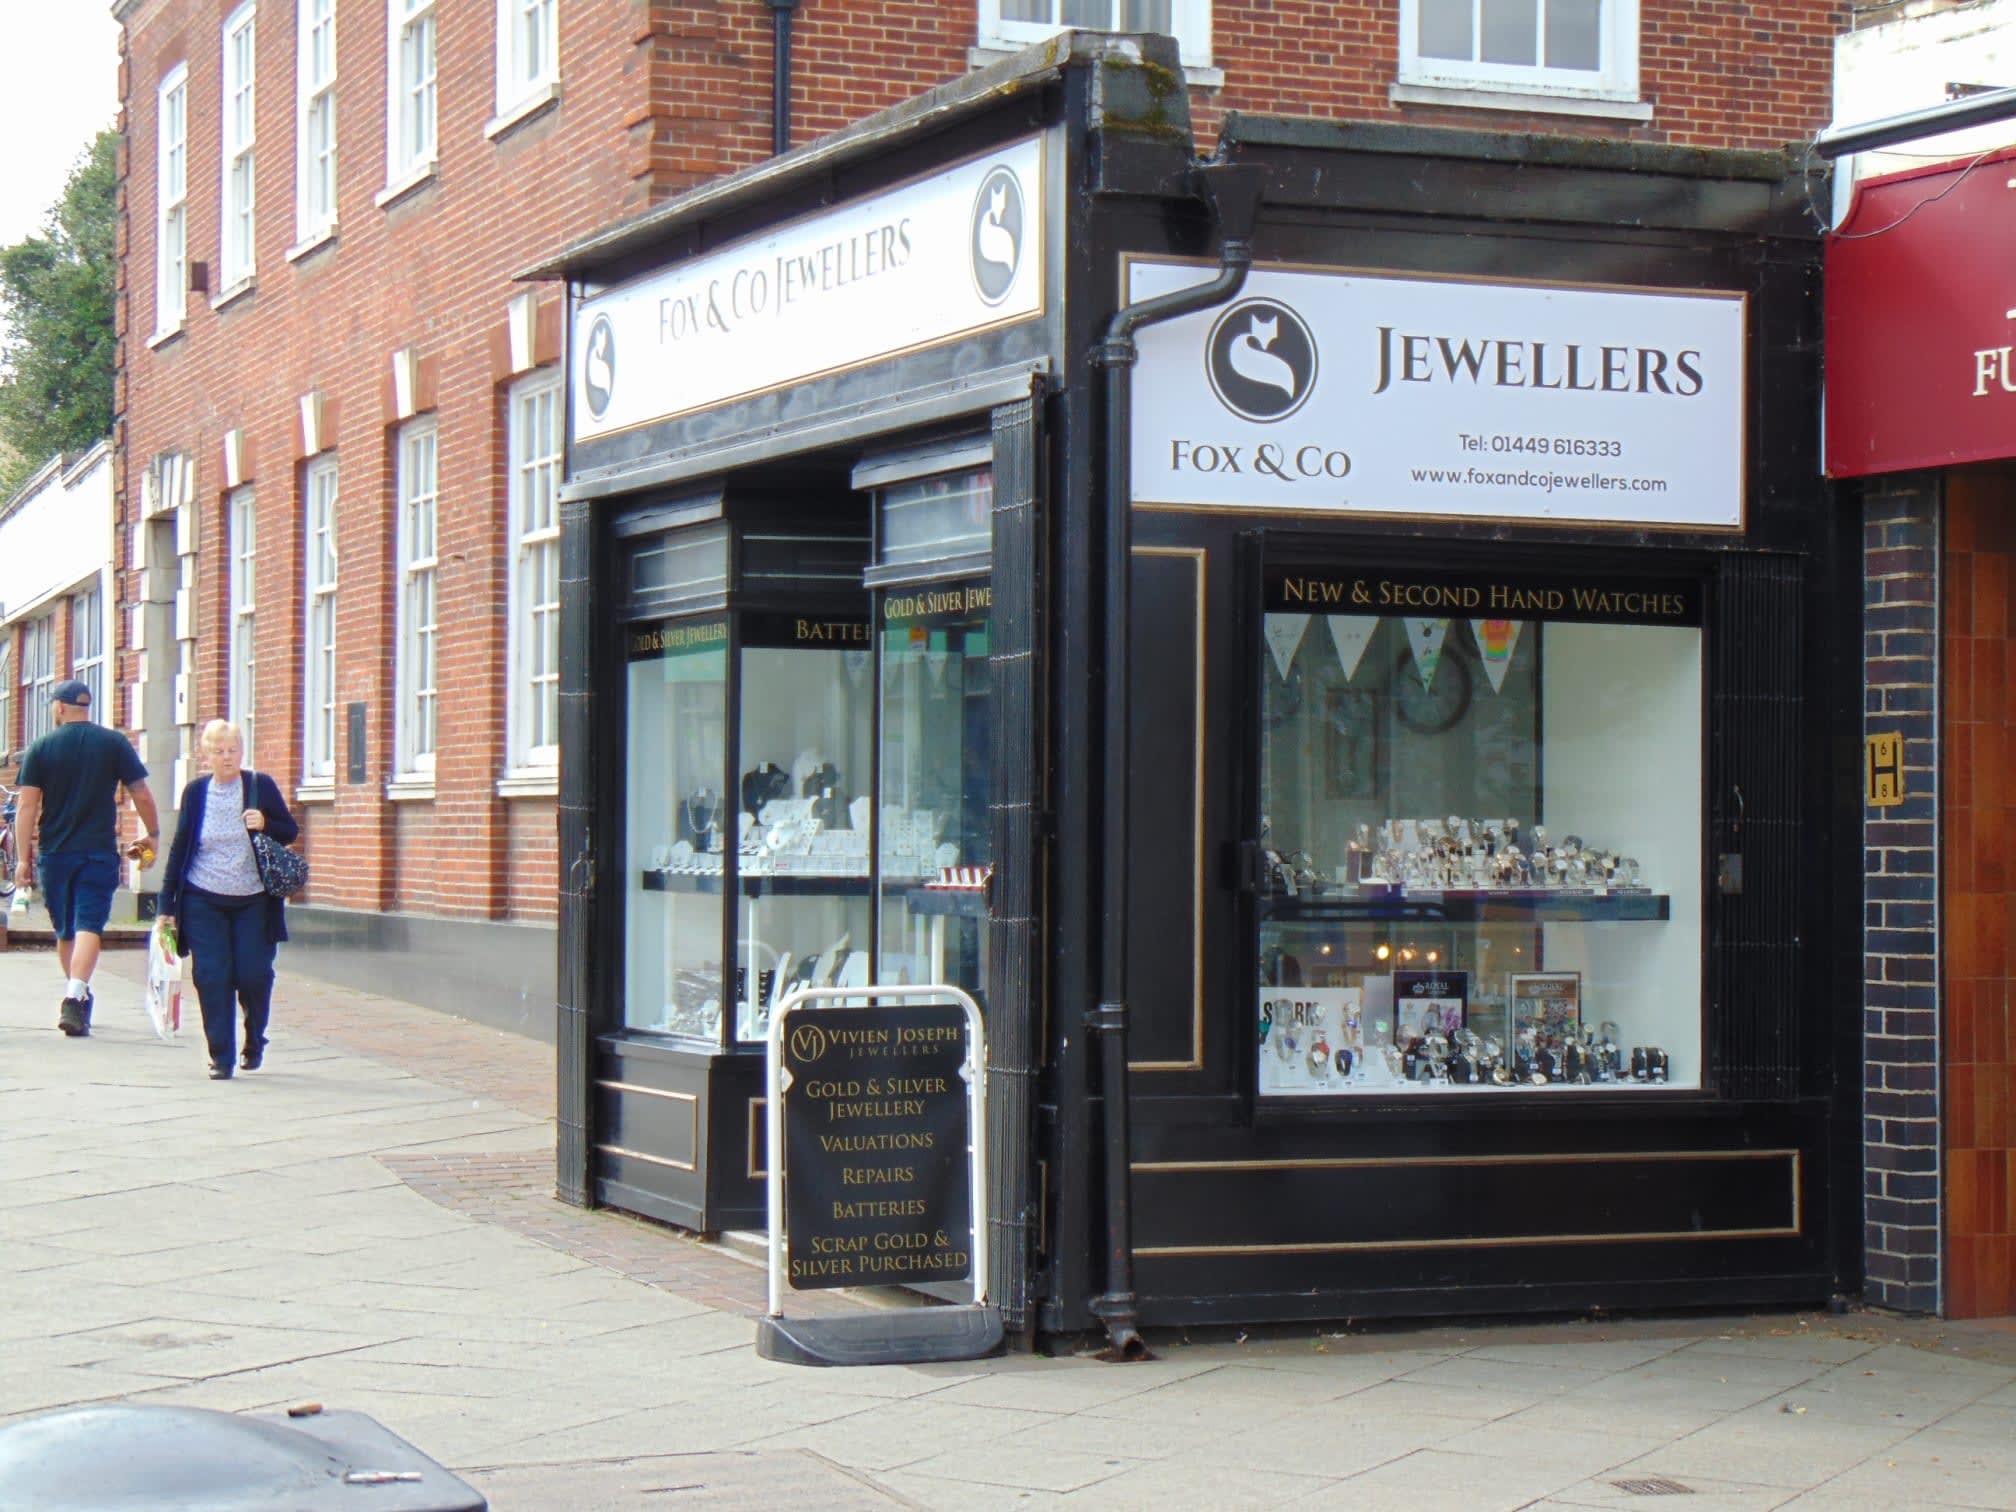 Fox & Co Jewellers Of Stowmarket Stowmarket 01449 616333